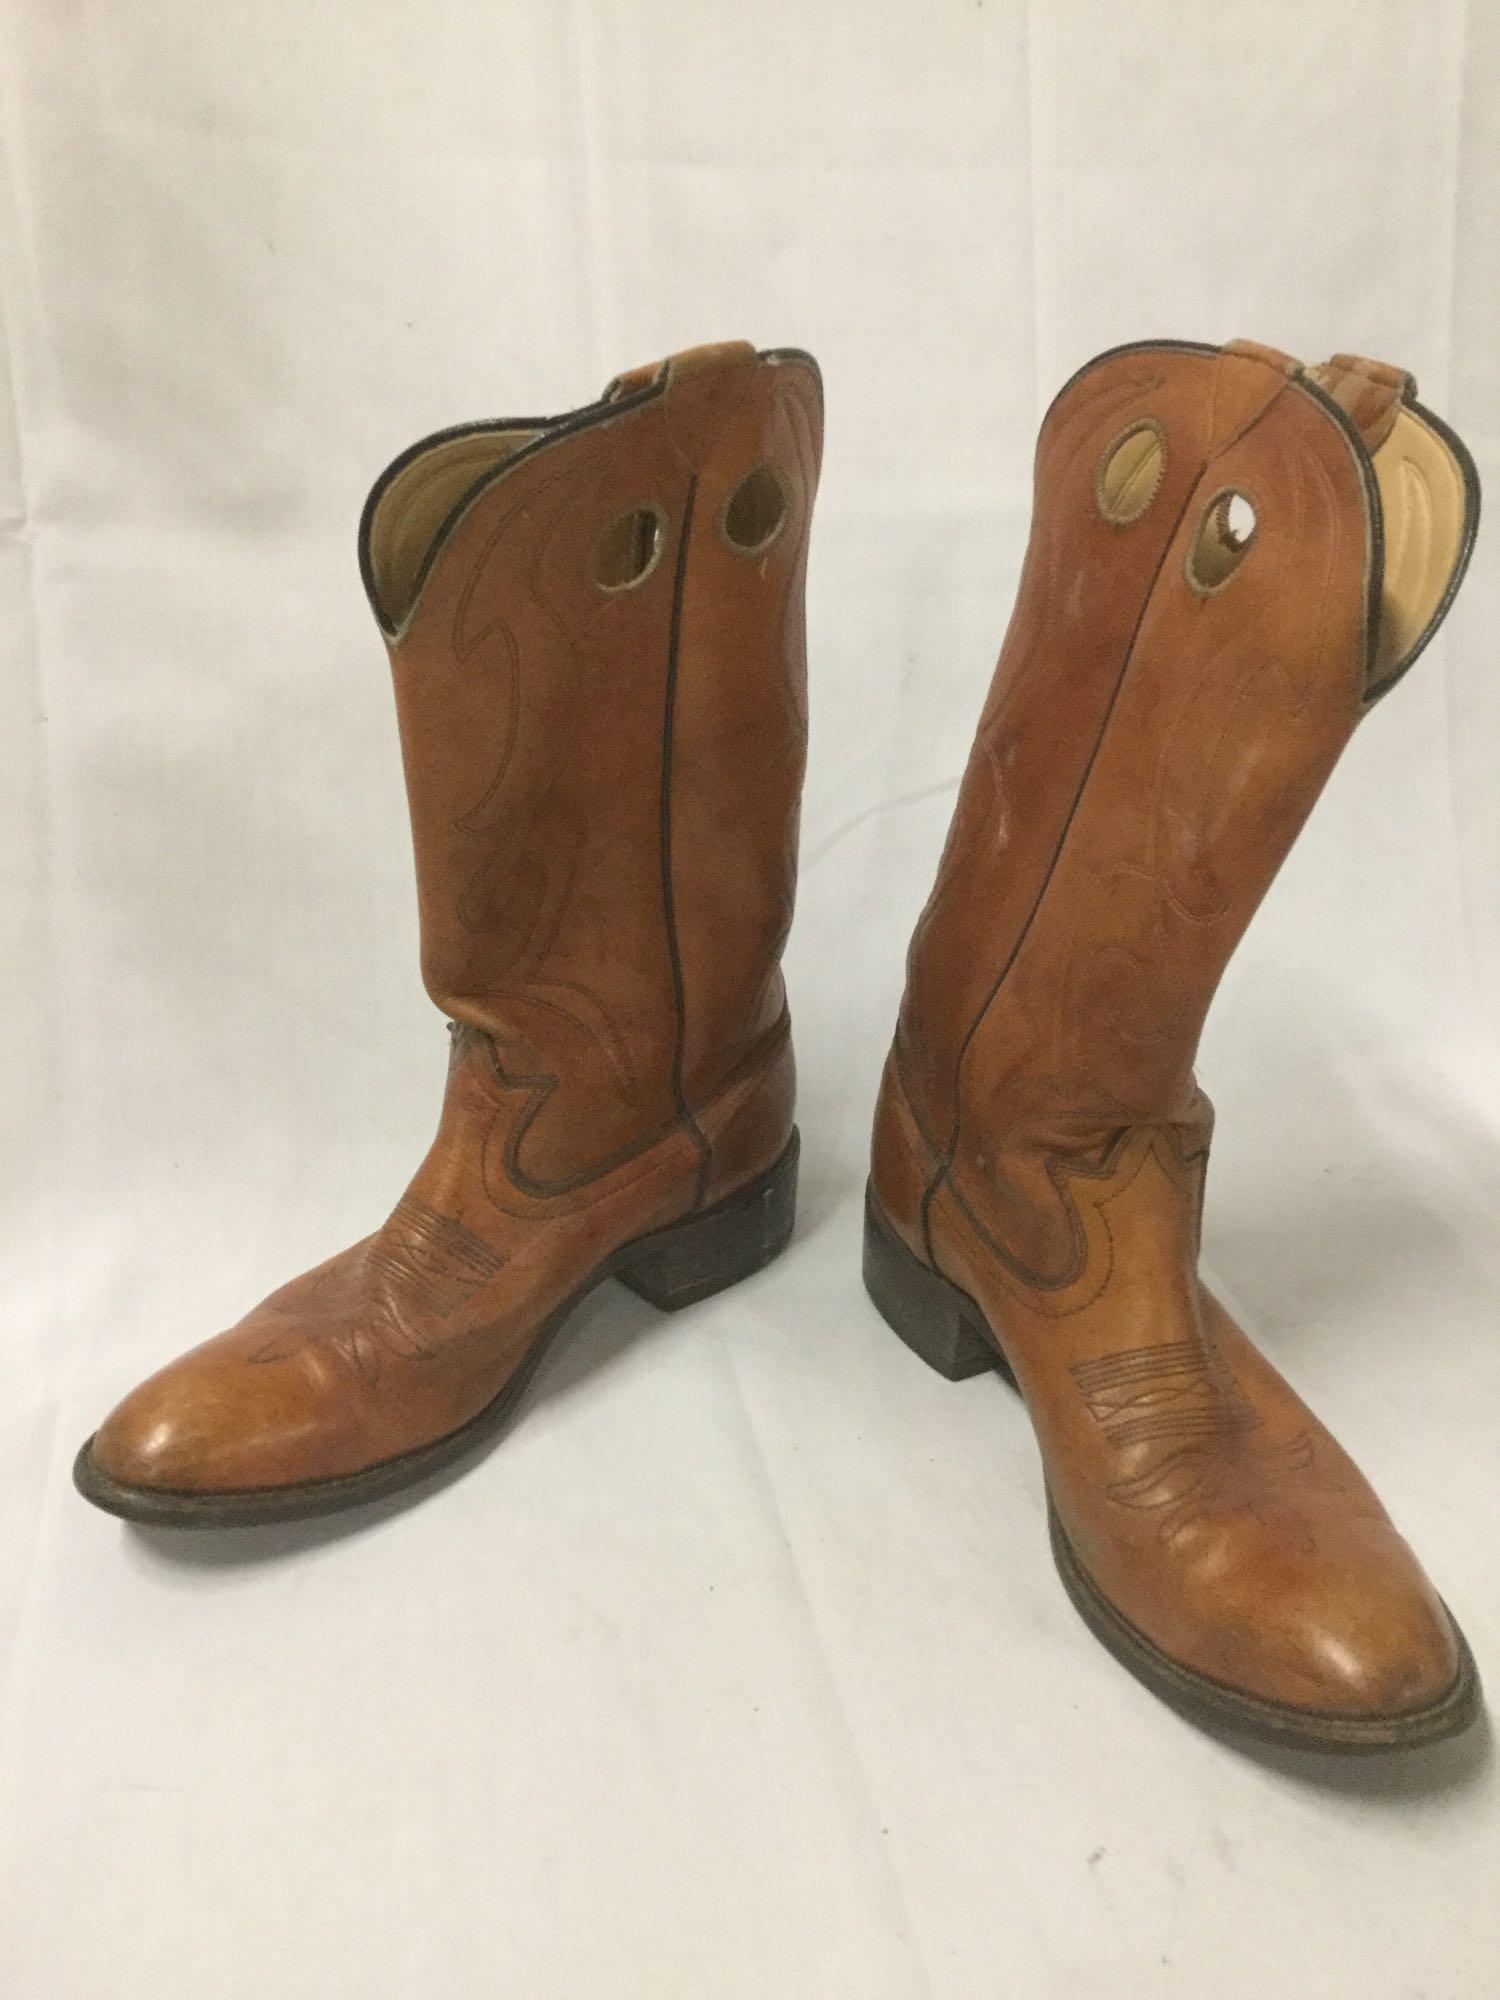 3 pairs of men's leather boots - Nocono black boots sz 10D, Brown Cowboy boots size 10 1/2 +